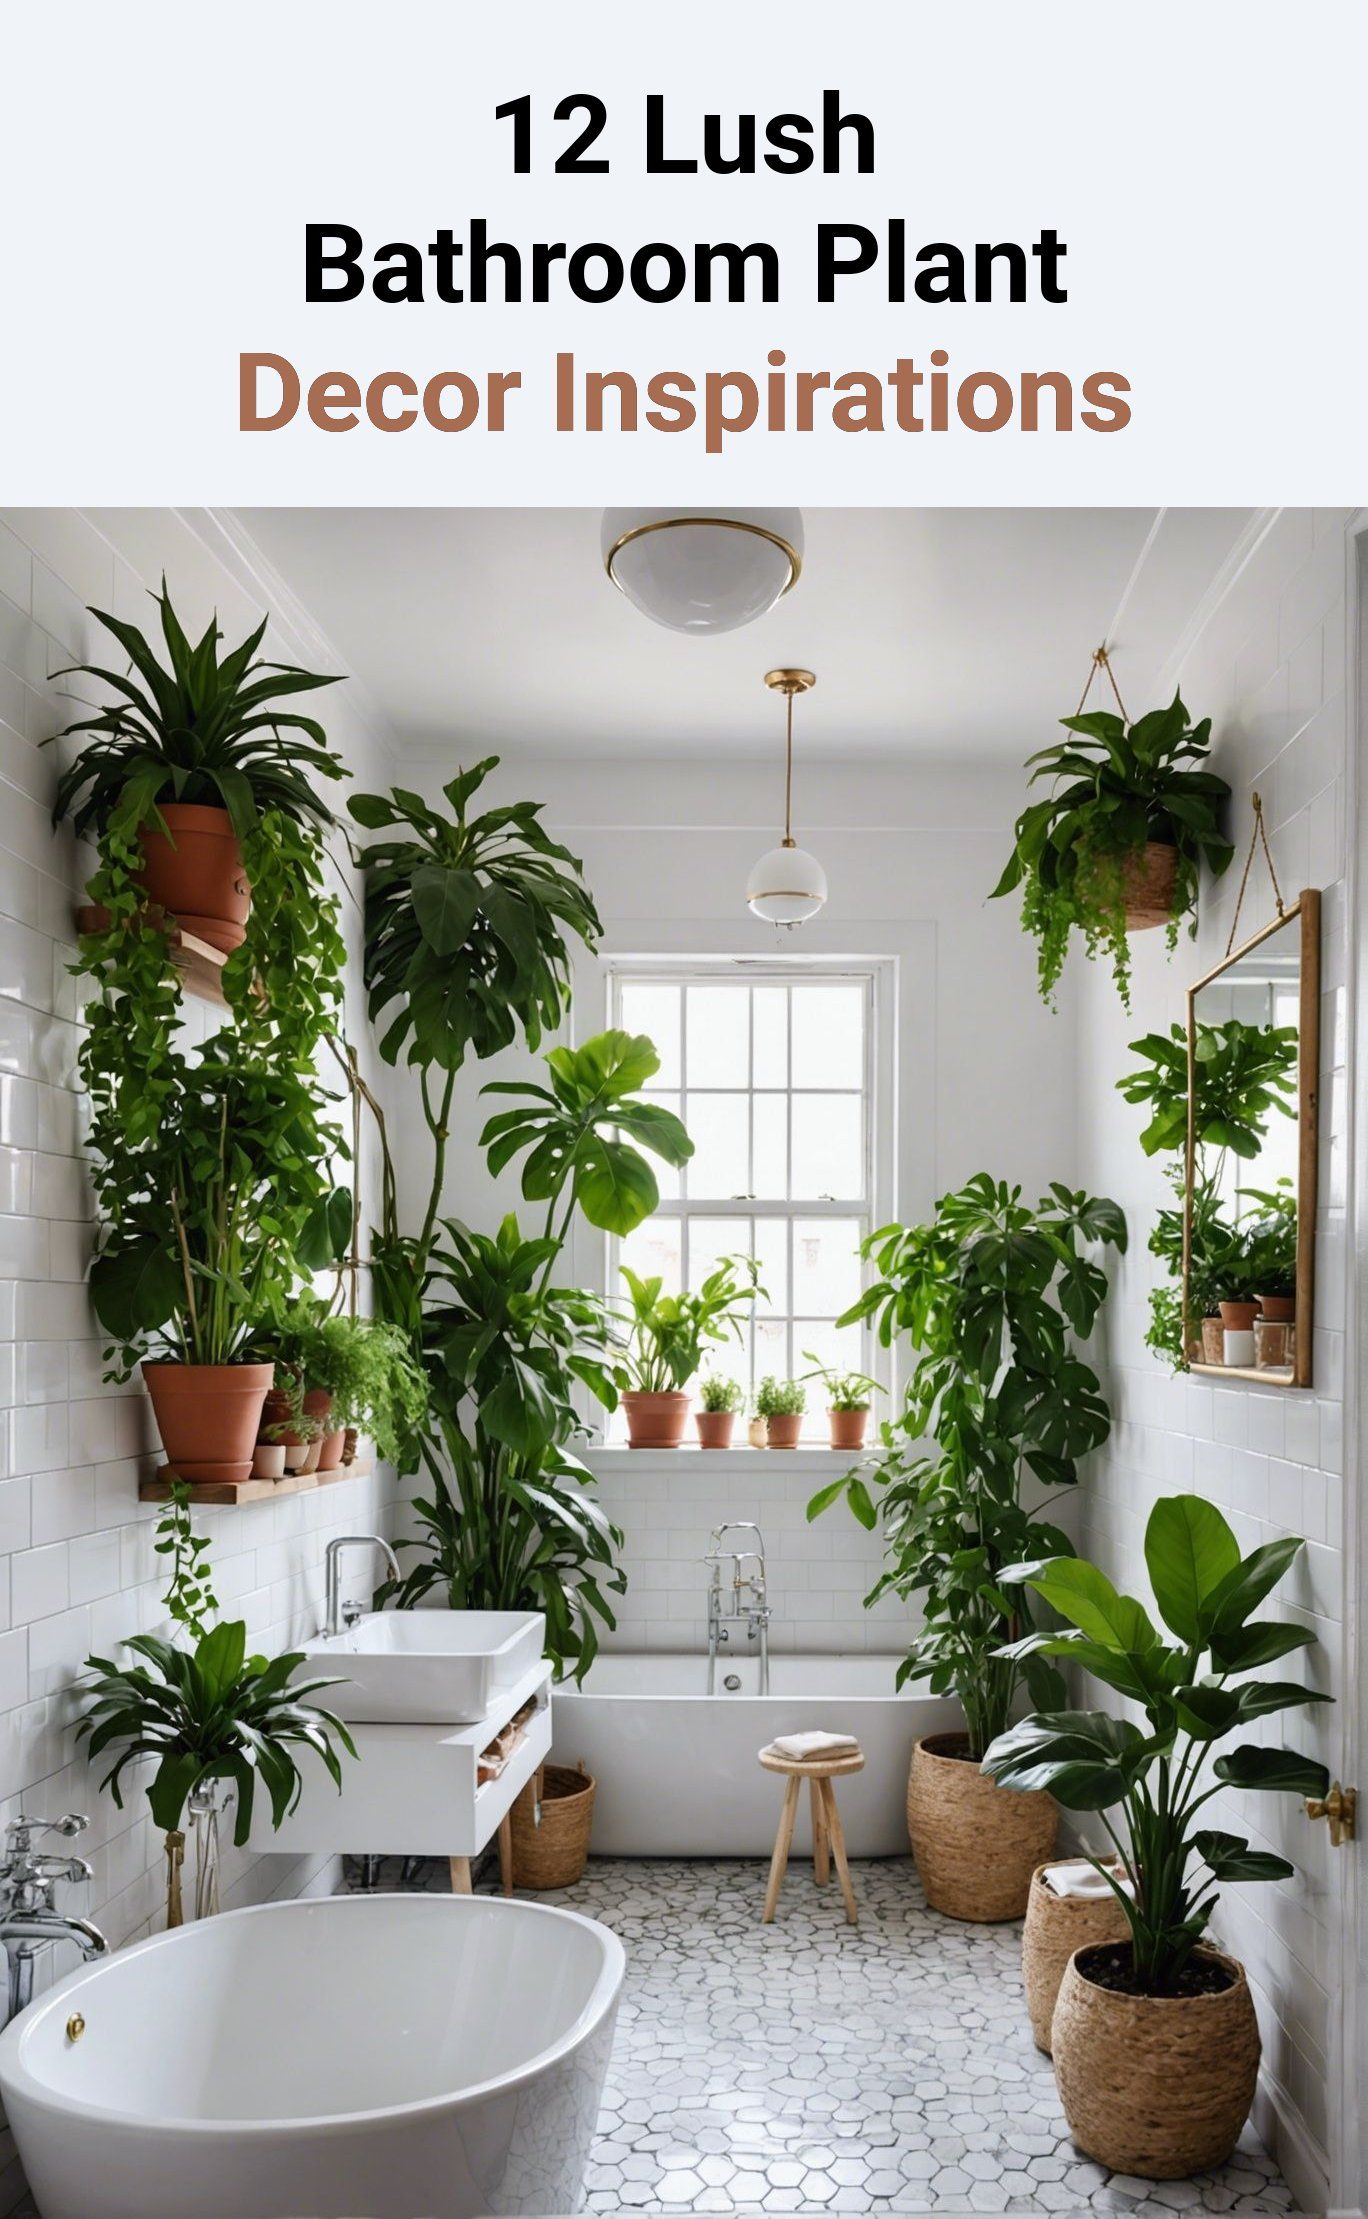 12 Lush Bathroom Plant Decor Inspirations